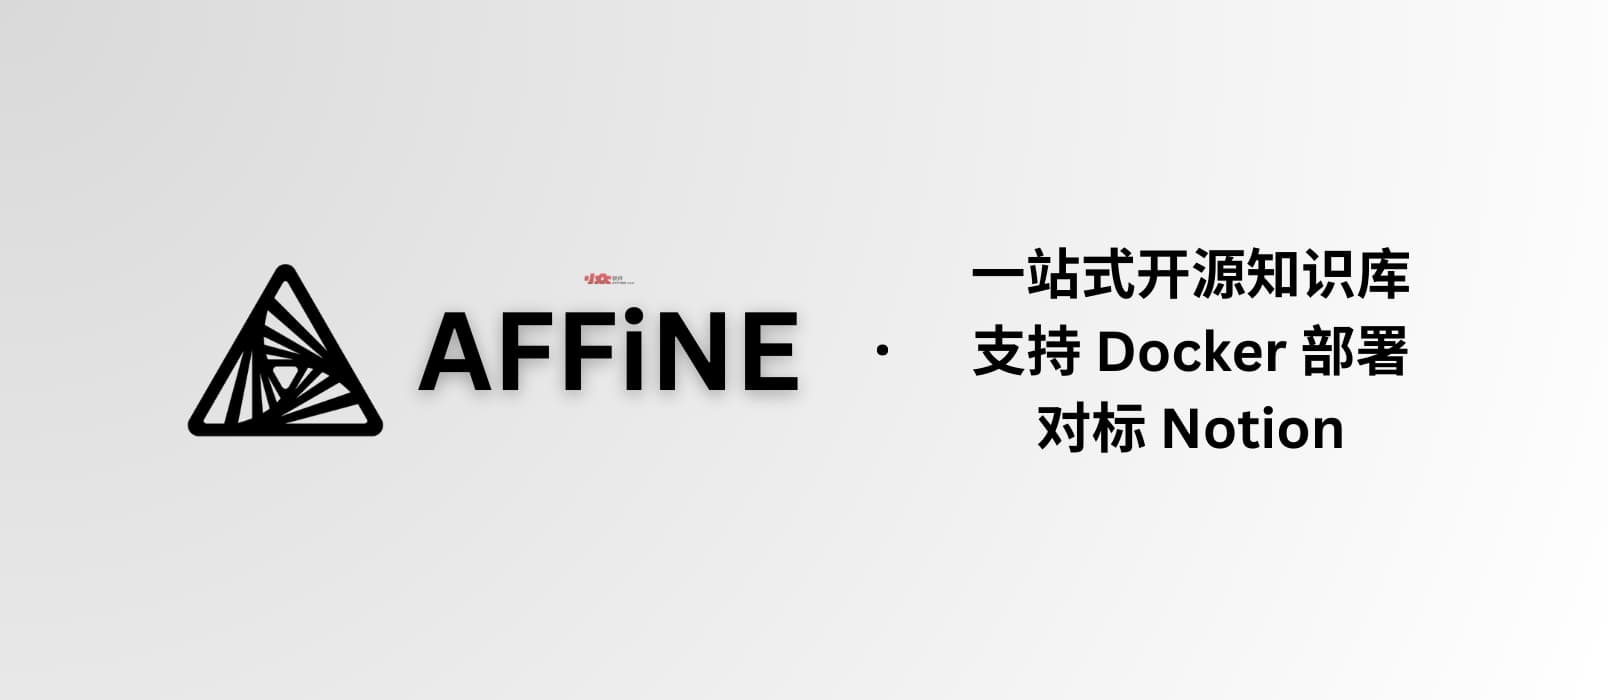 AFFiNE - 支持 Docker 部署的开源知识库工具｜宣称对标 Notion，一站式知识库、笔记解决方案